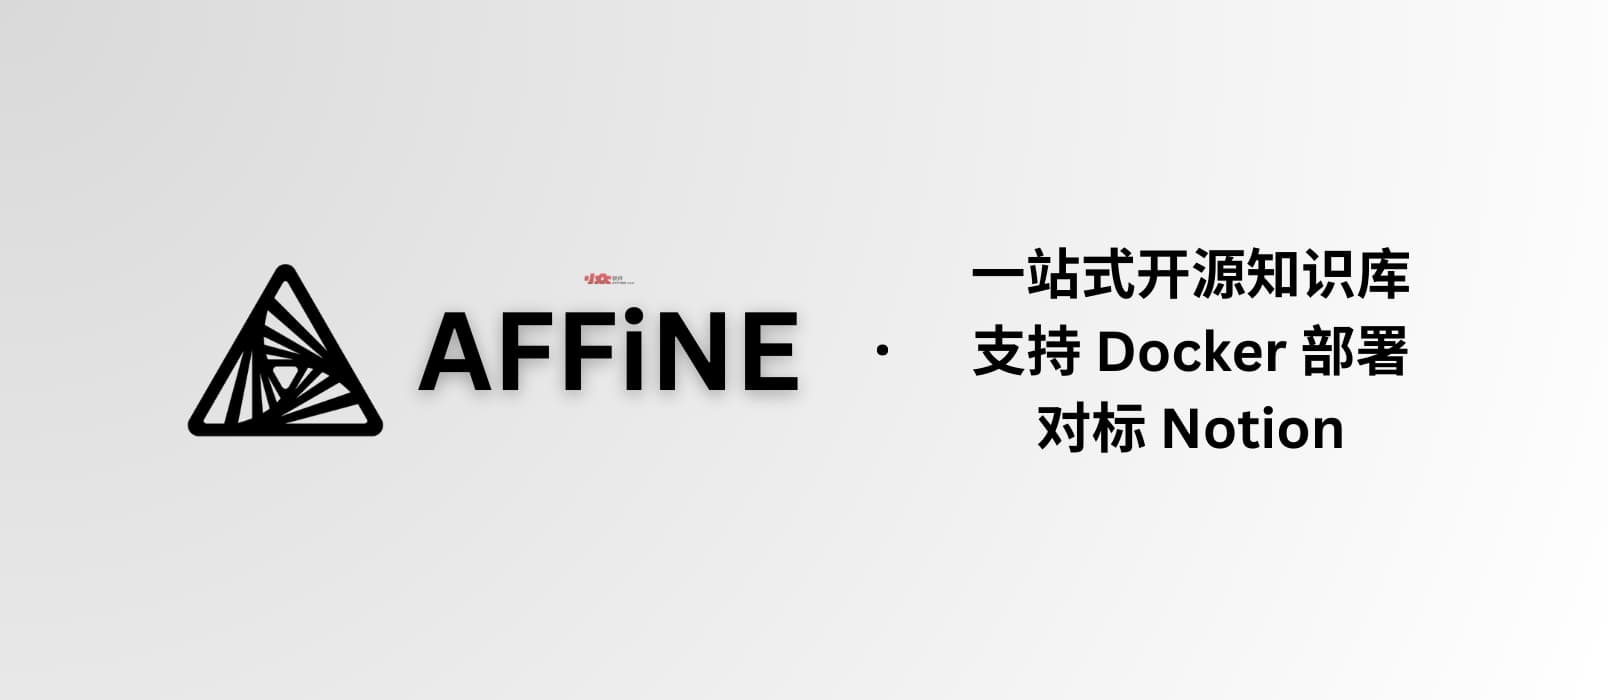 AFFiNE - 支持 Docker 部署的开源知识库工具｜宣称对标 Notion，一站式知识库、笔记解决方案